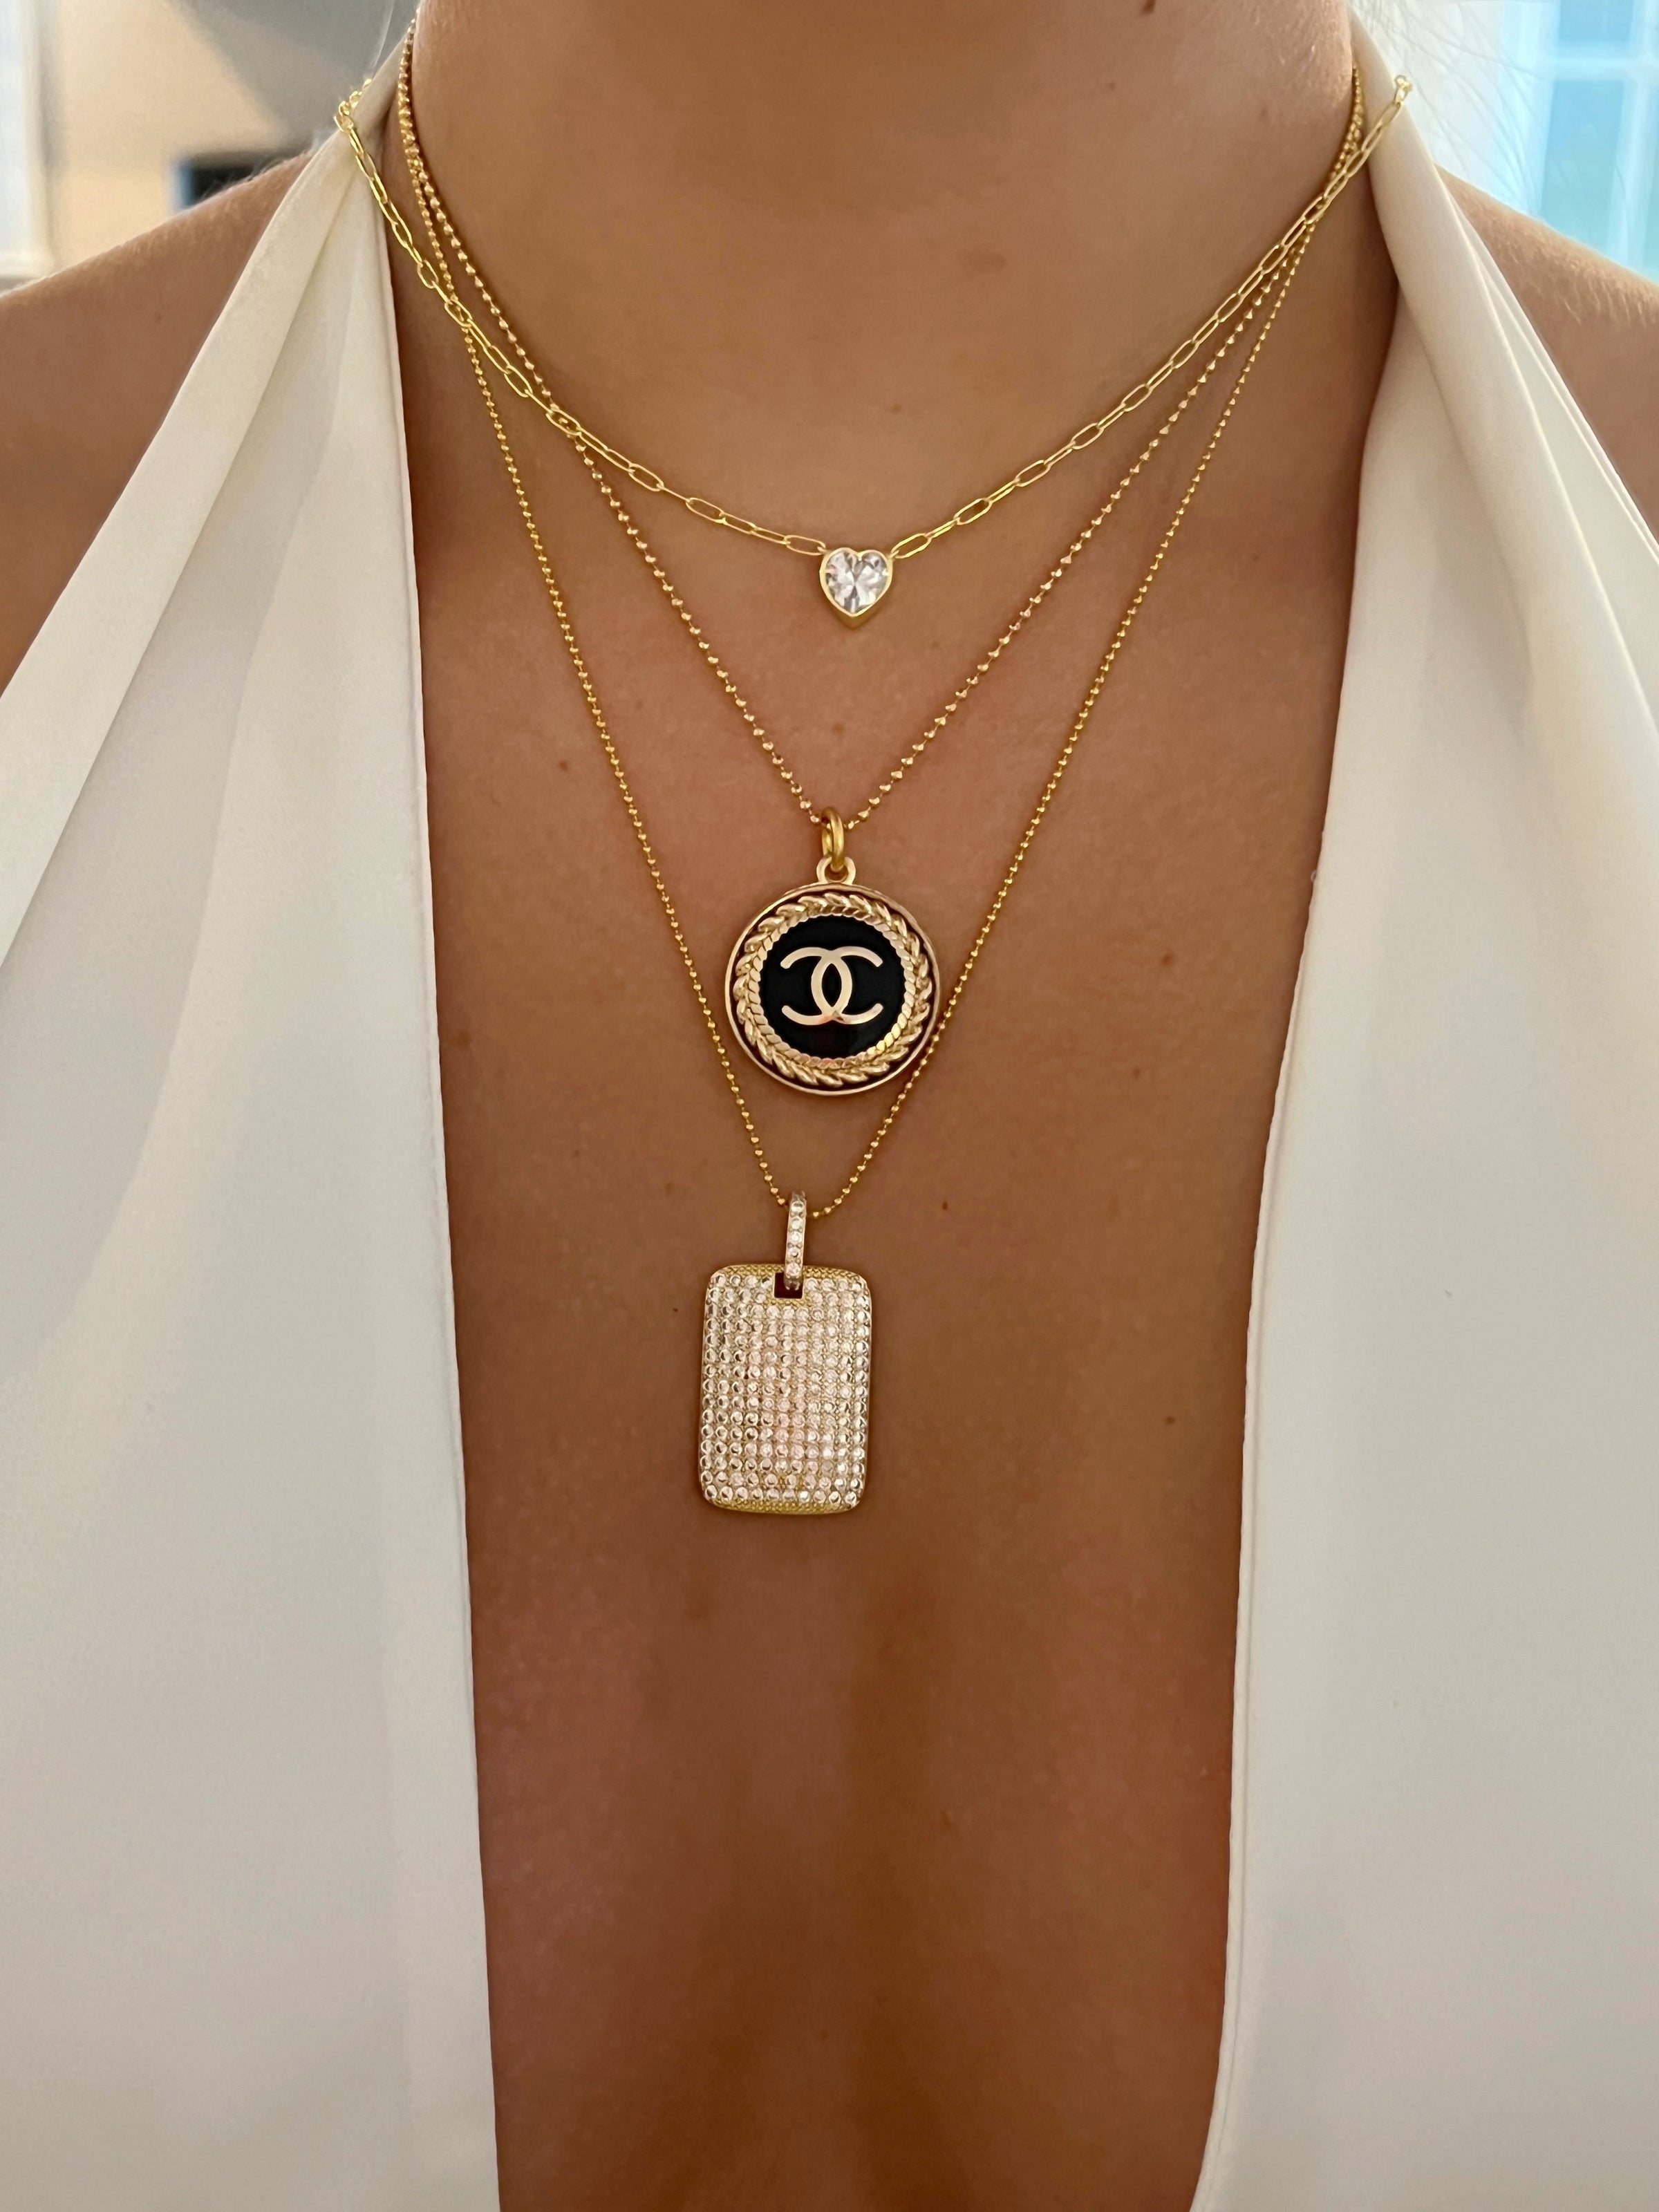 Vintage & Repurposed Chanel Button Necklaces